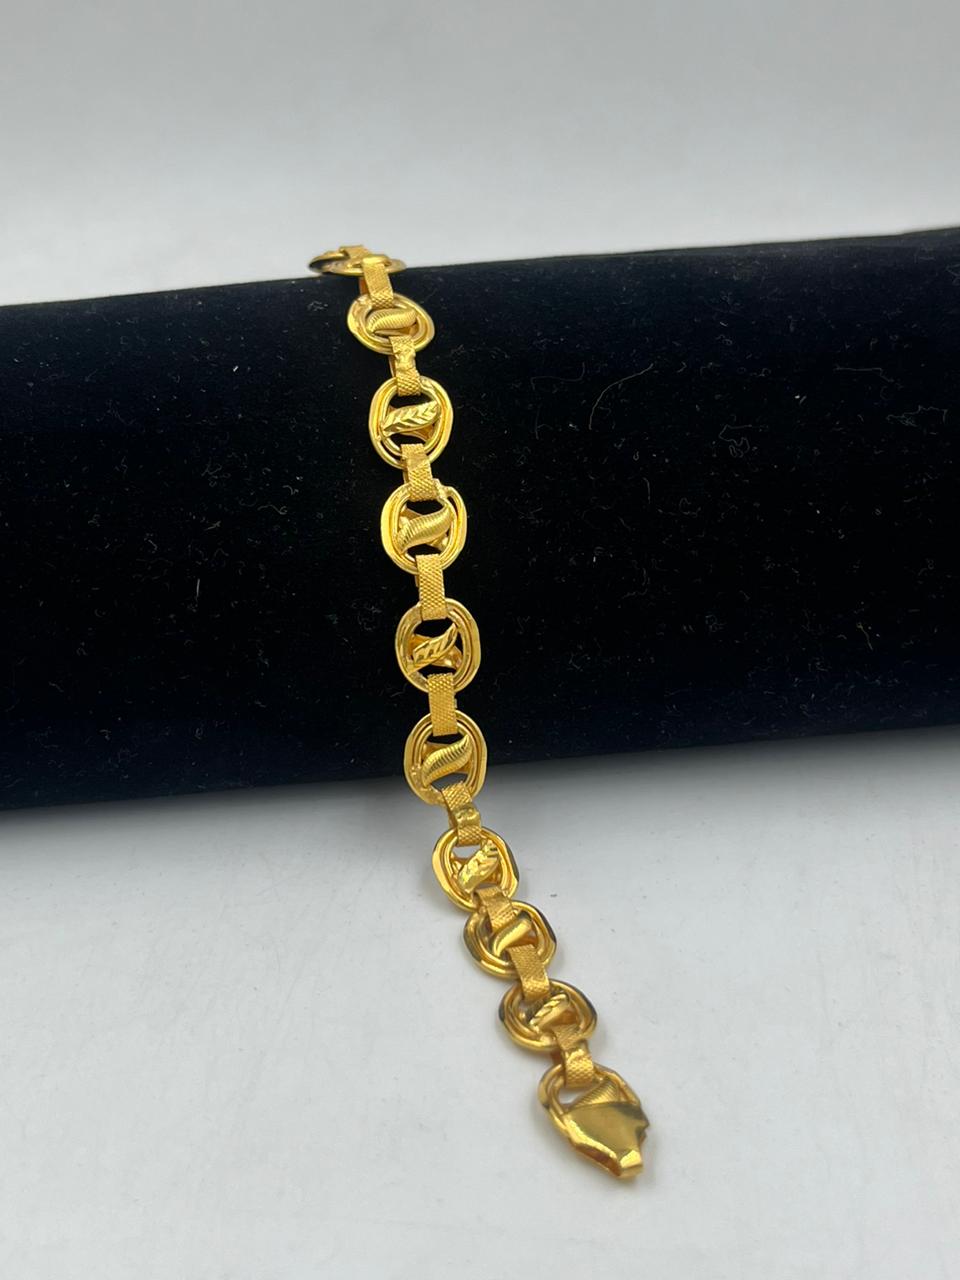 Buy Daily Wear One Gram Gold Mens Bracelet Party Wear Jewelry BRAC324